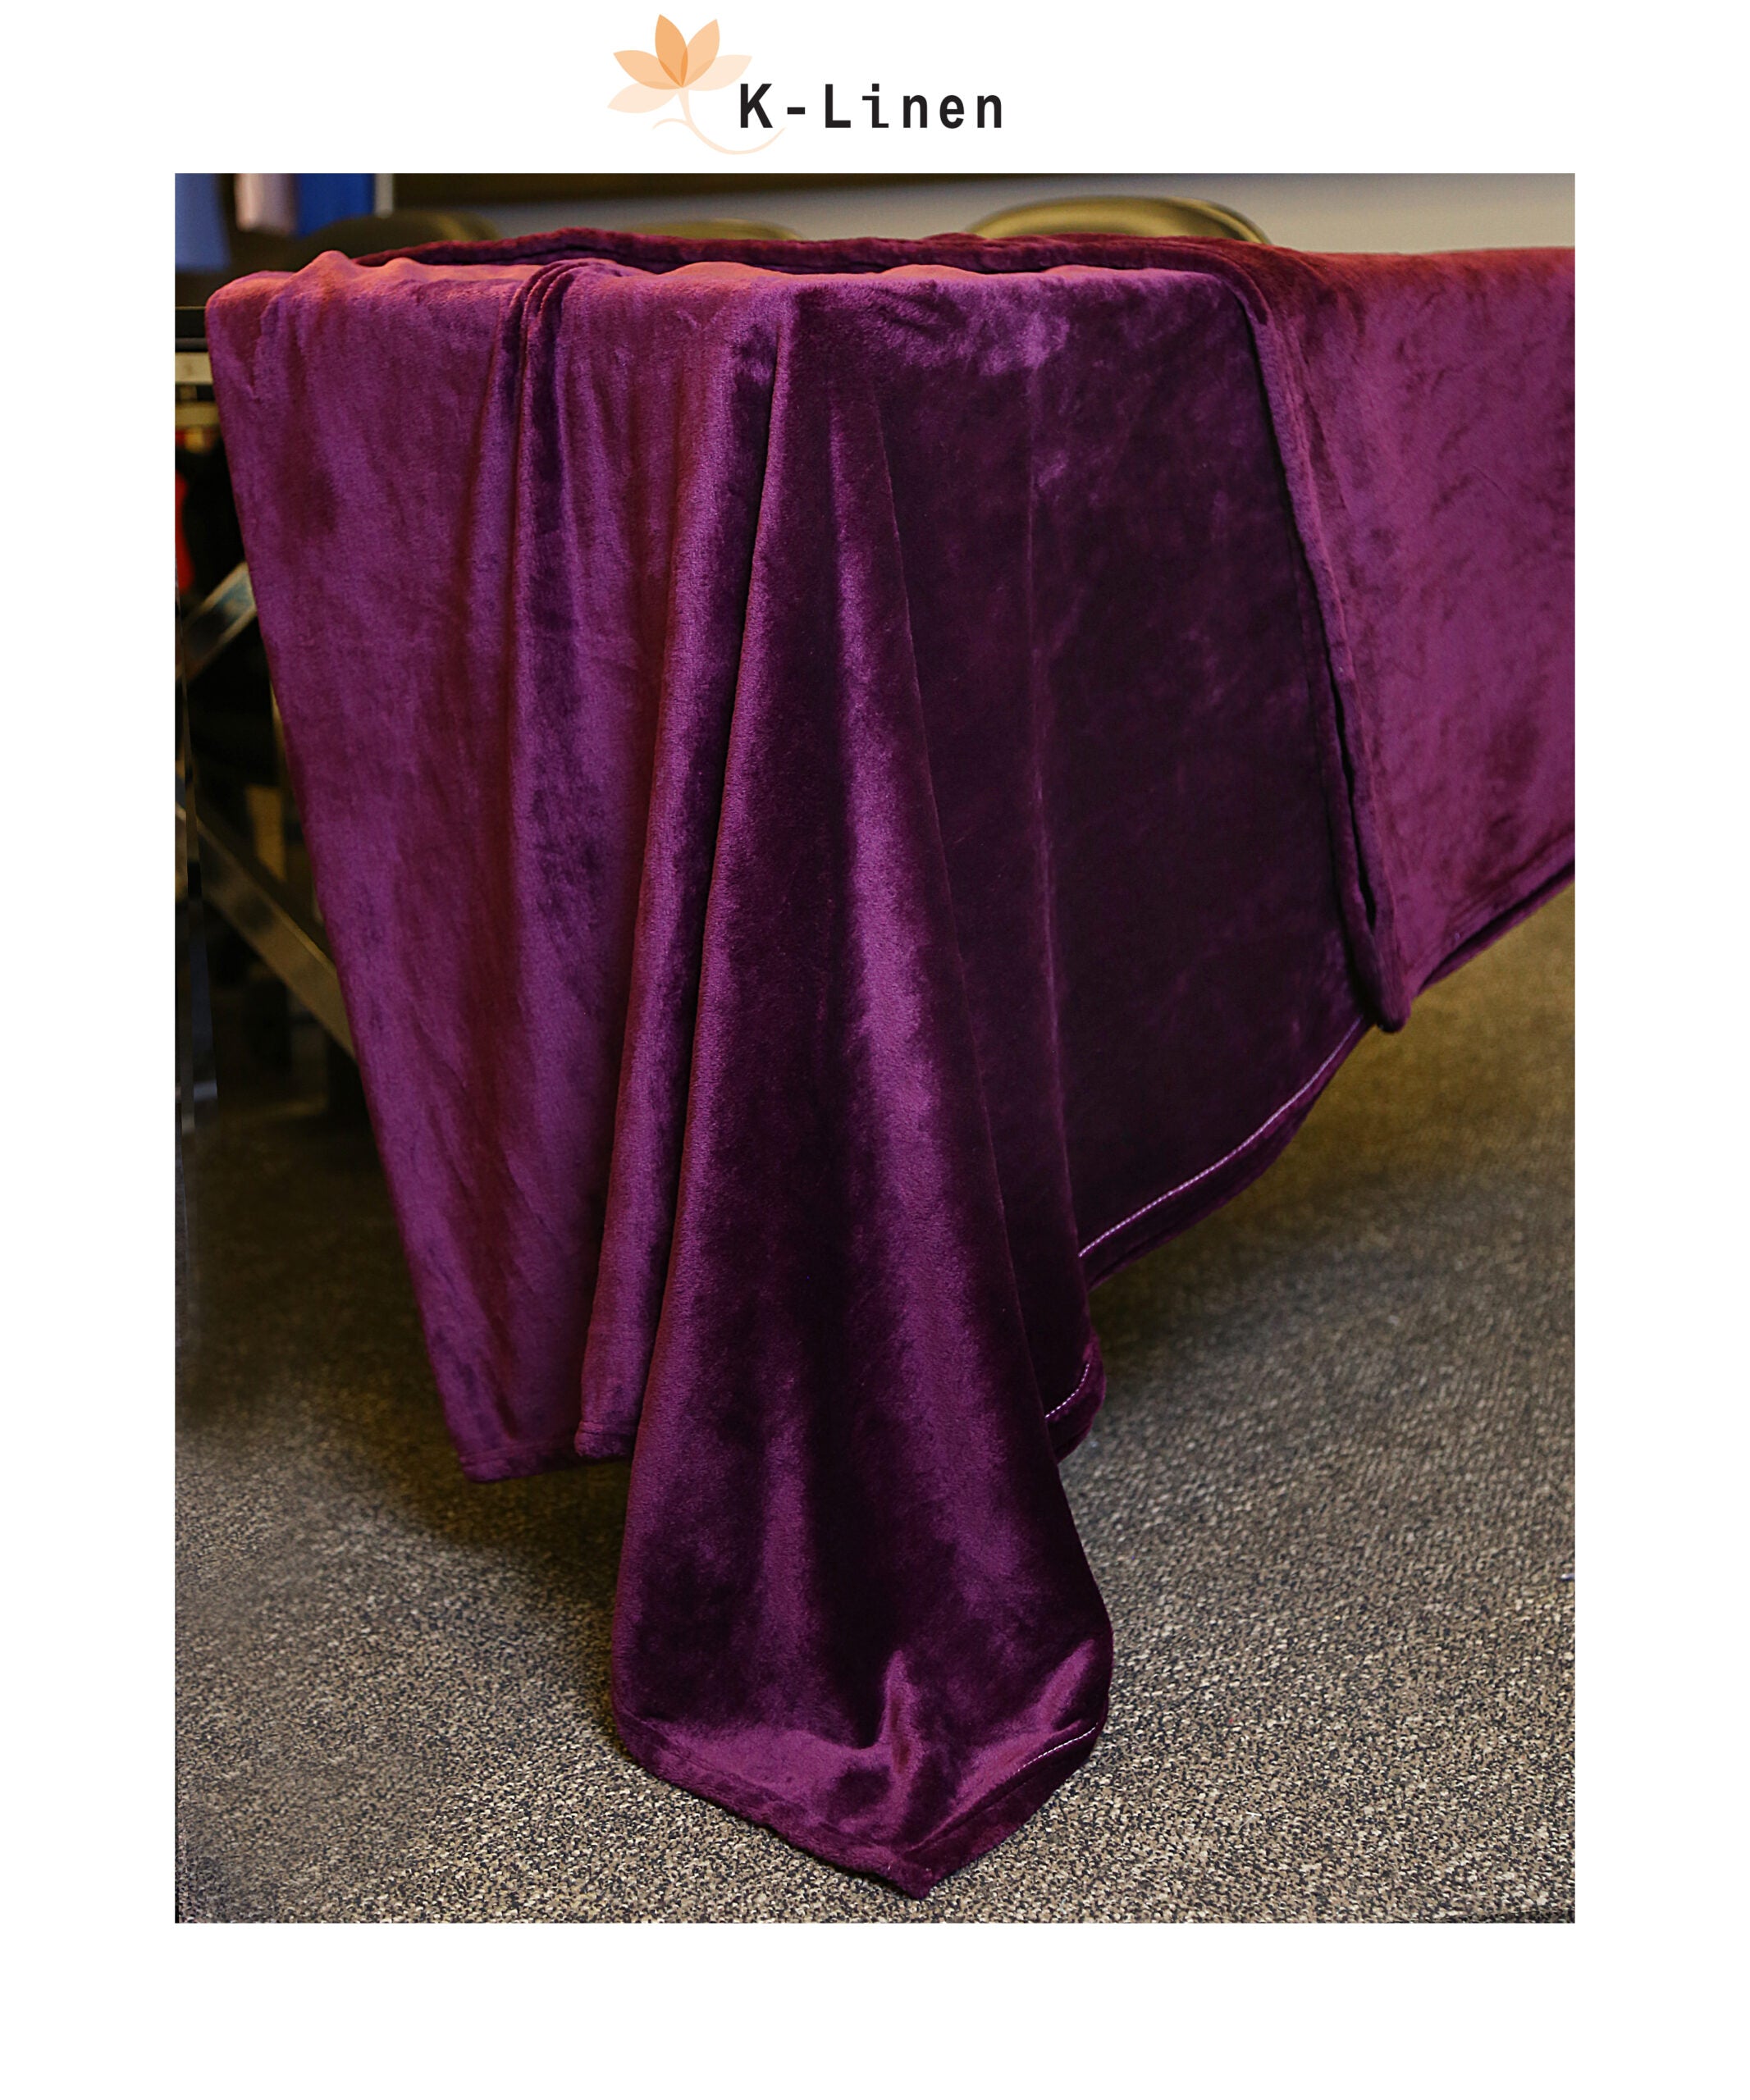 Purple Plush Blanket